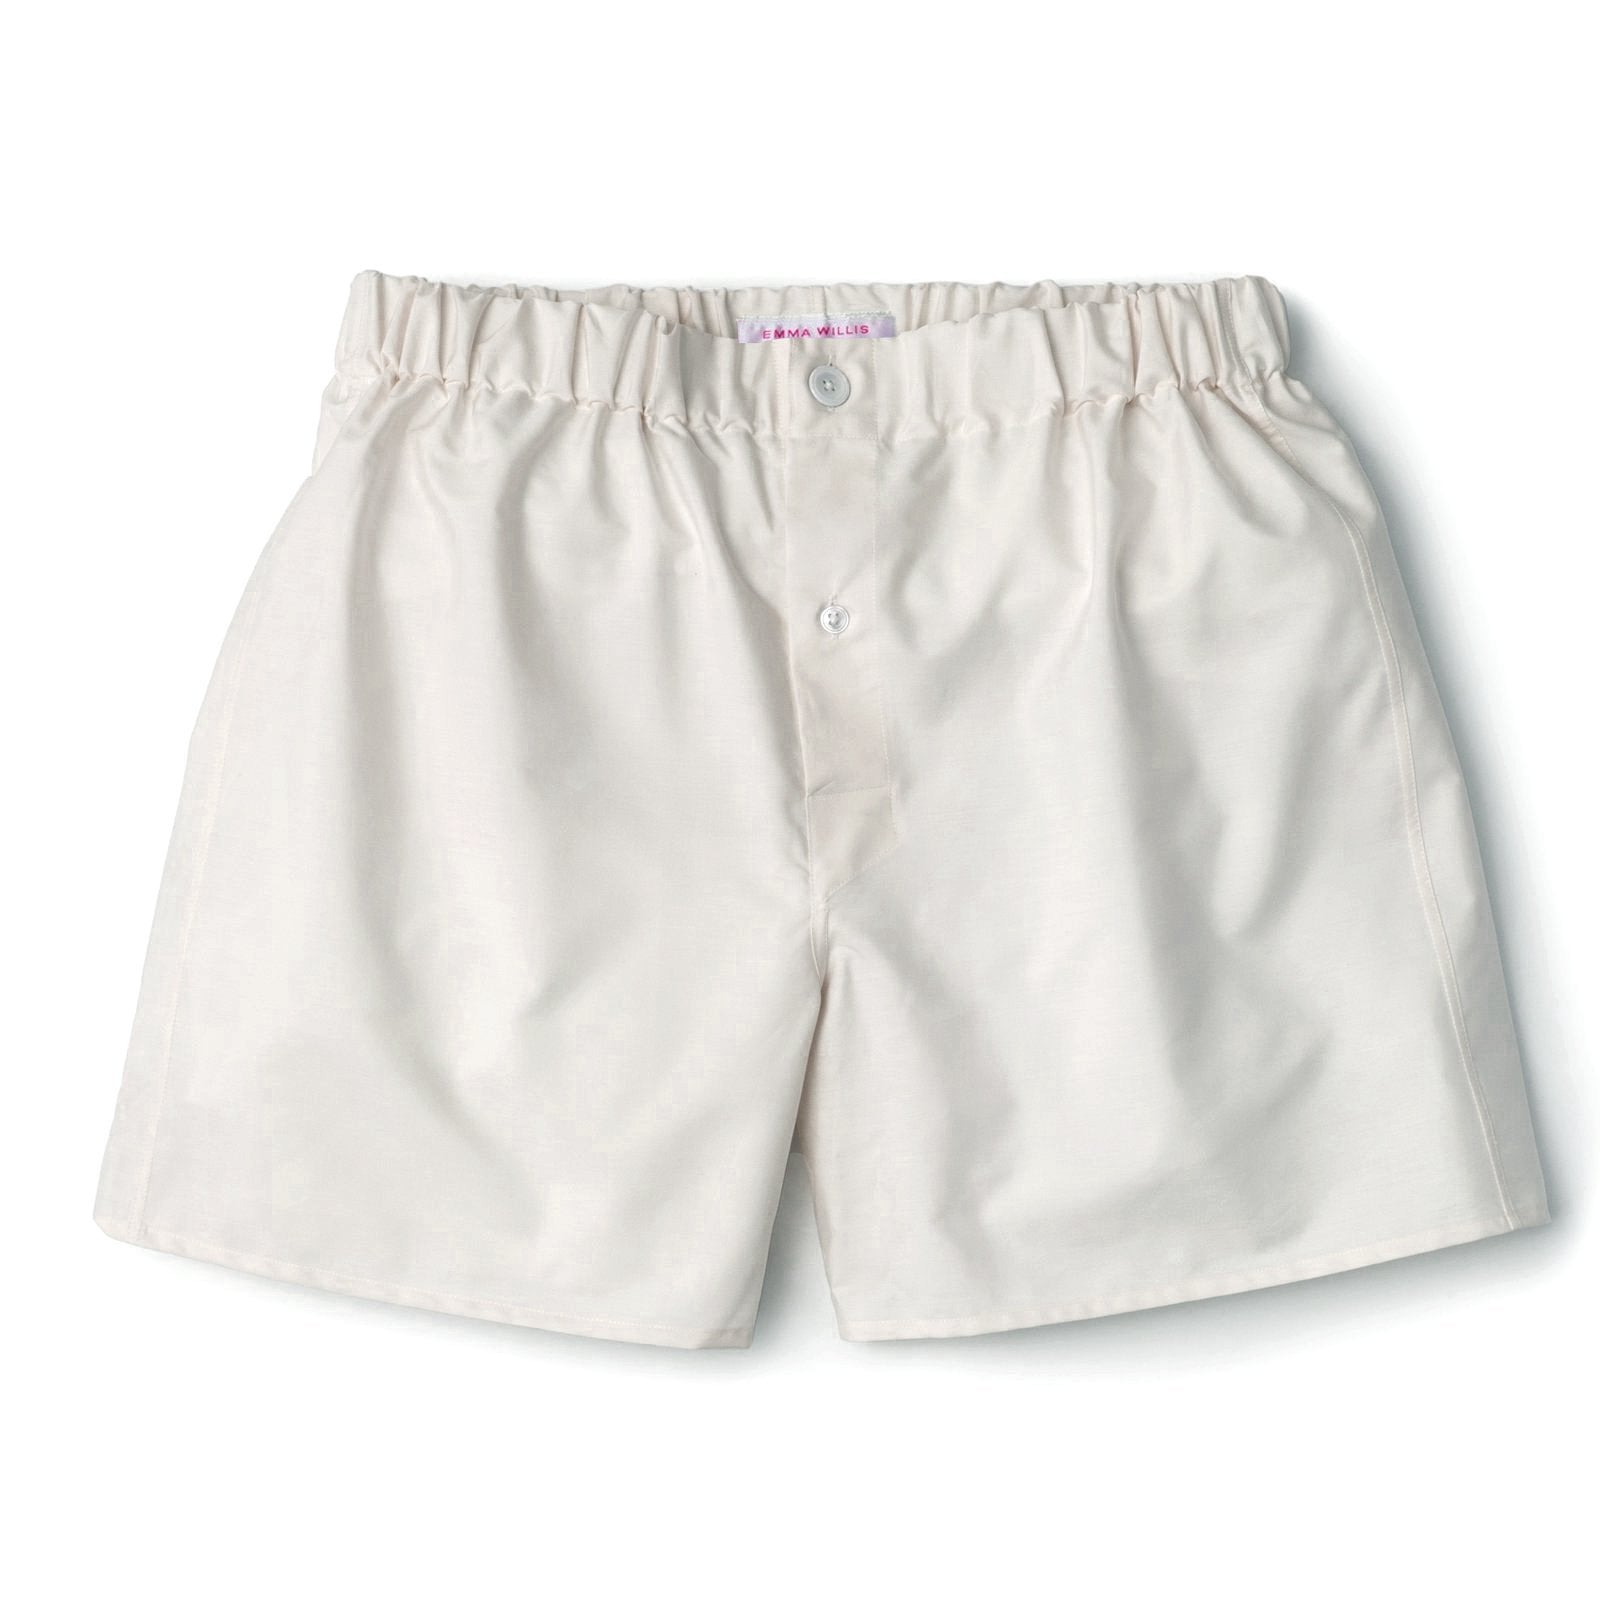 Ivory Superior Cotton Boxer Shorts - Slim Fit